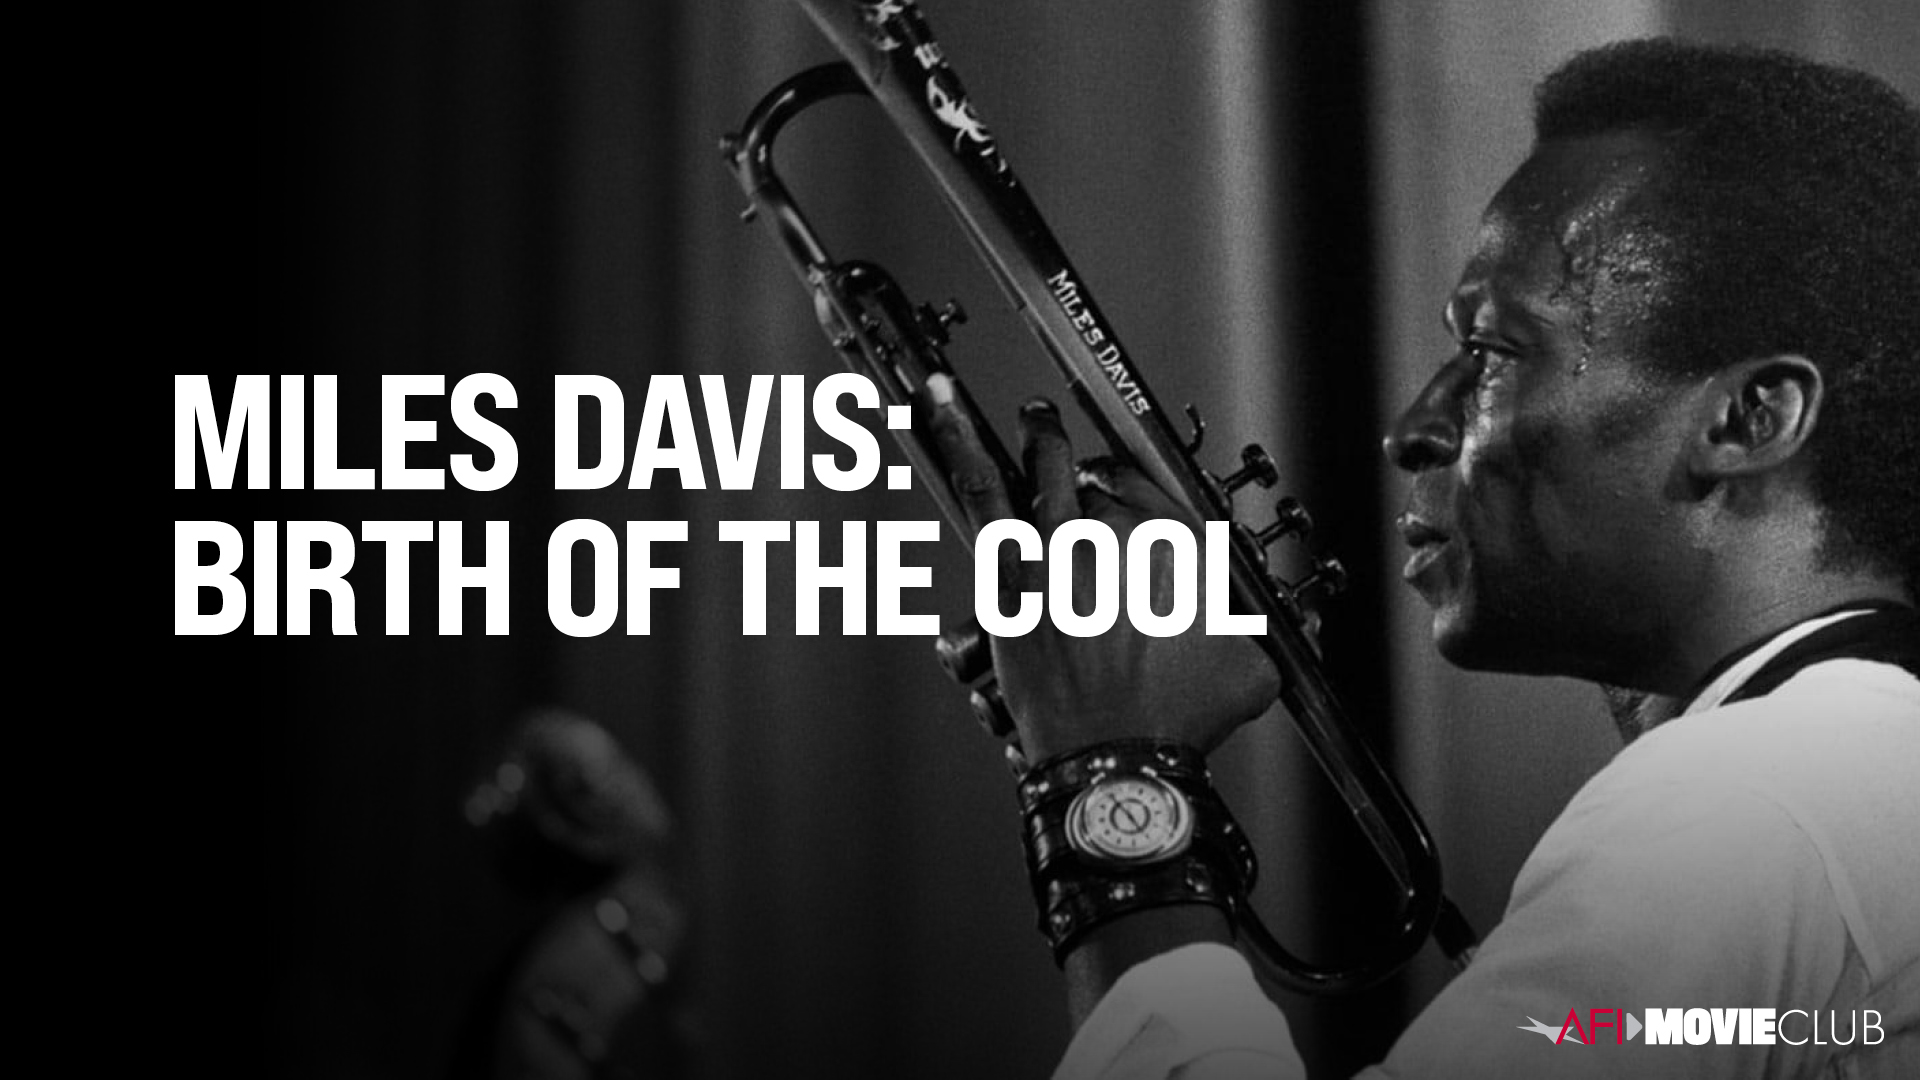 Miles Davis: Birth of the Cool Film Still - Miles Davis